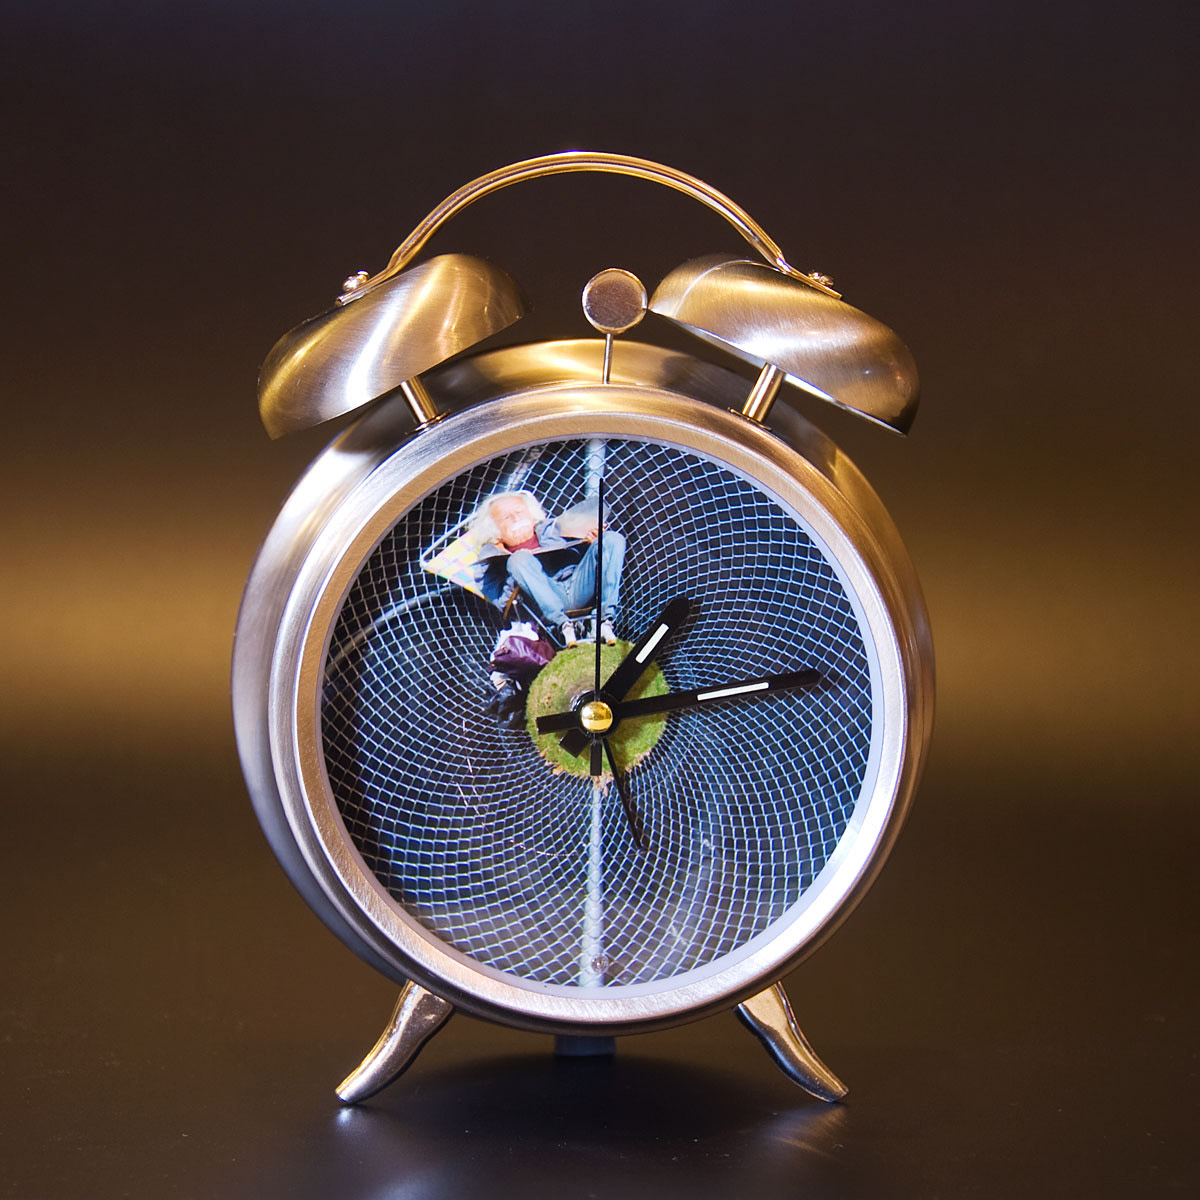 small planet wall clock Alarm clock translucent obect applied art